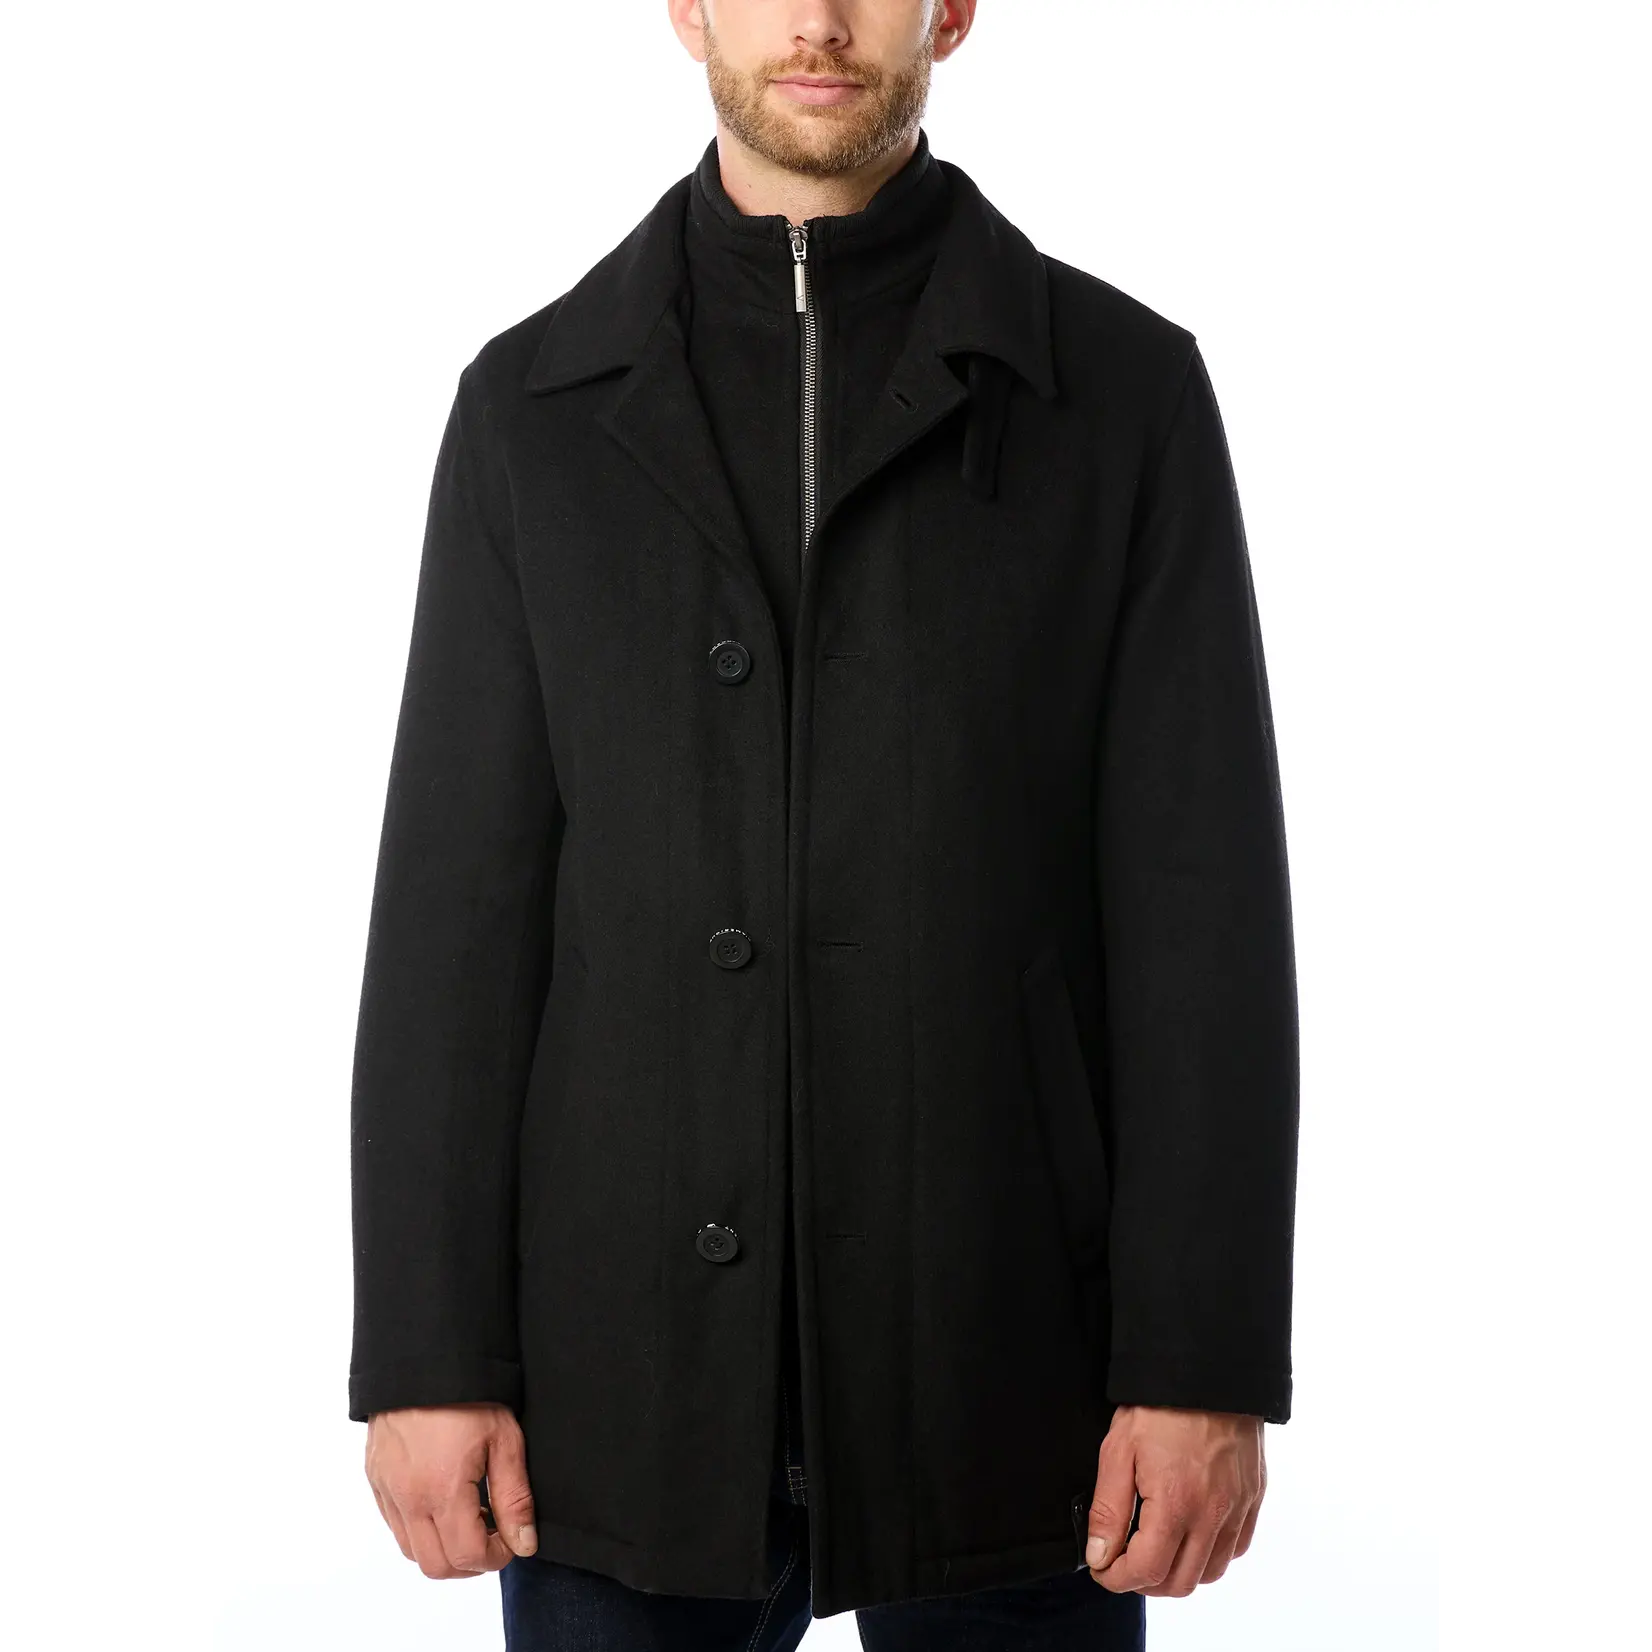 Vincent D'Amerique Vincent D'Amerique Mens dress jacket/over coat with zip off lining, jackets, coats